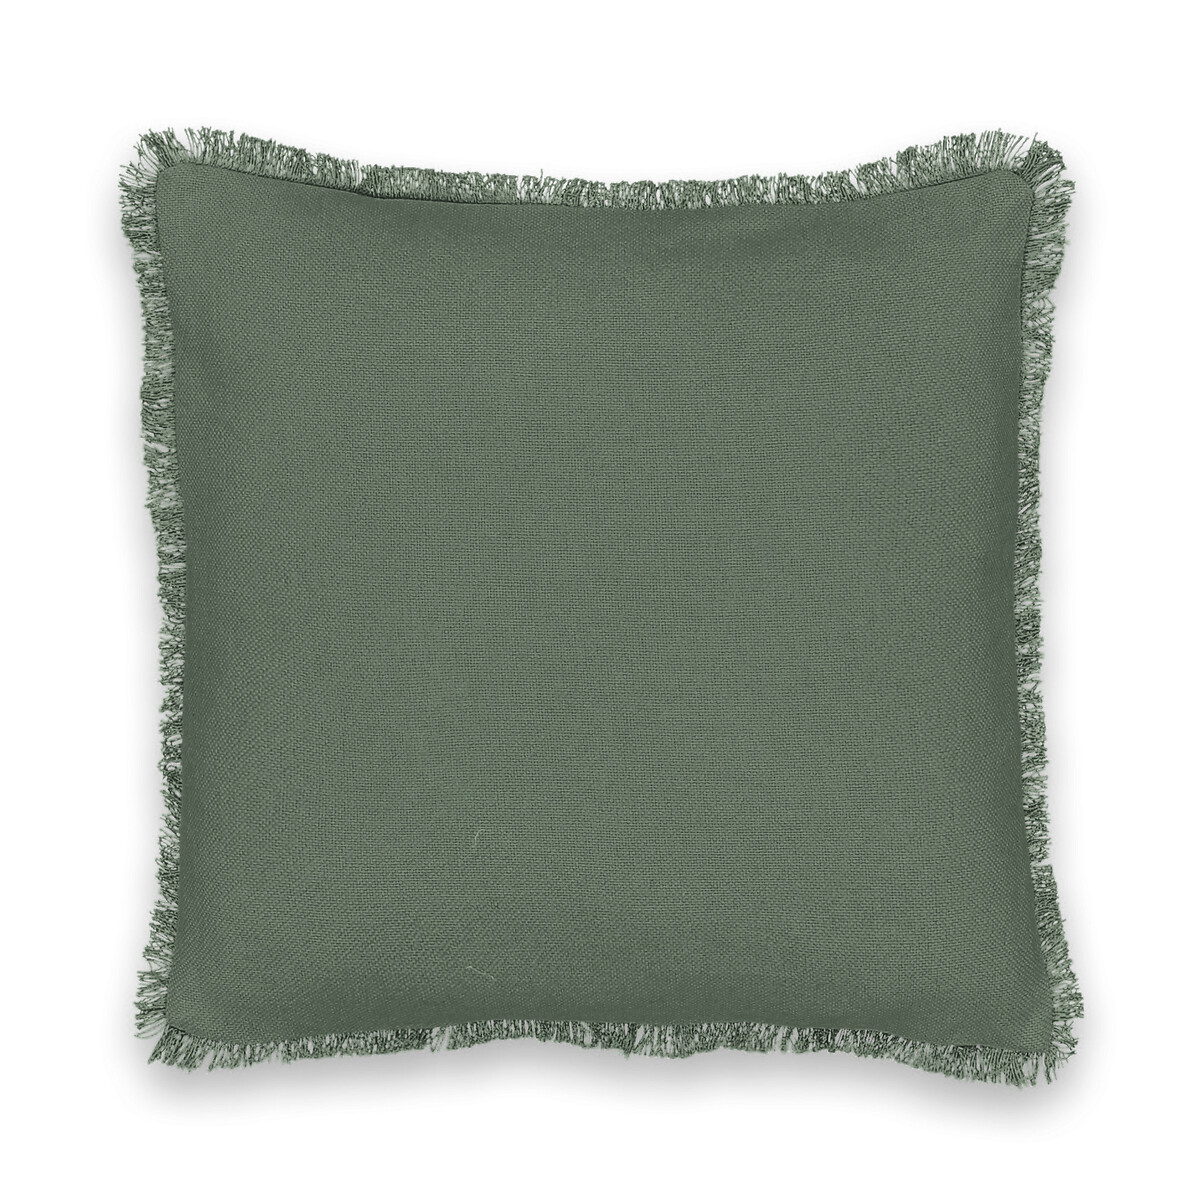 panama chayka afganka 1 Чехол на подушку из плетеного хлопка Panama 40 x 40 см зеленый